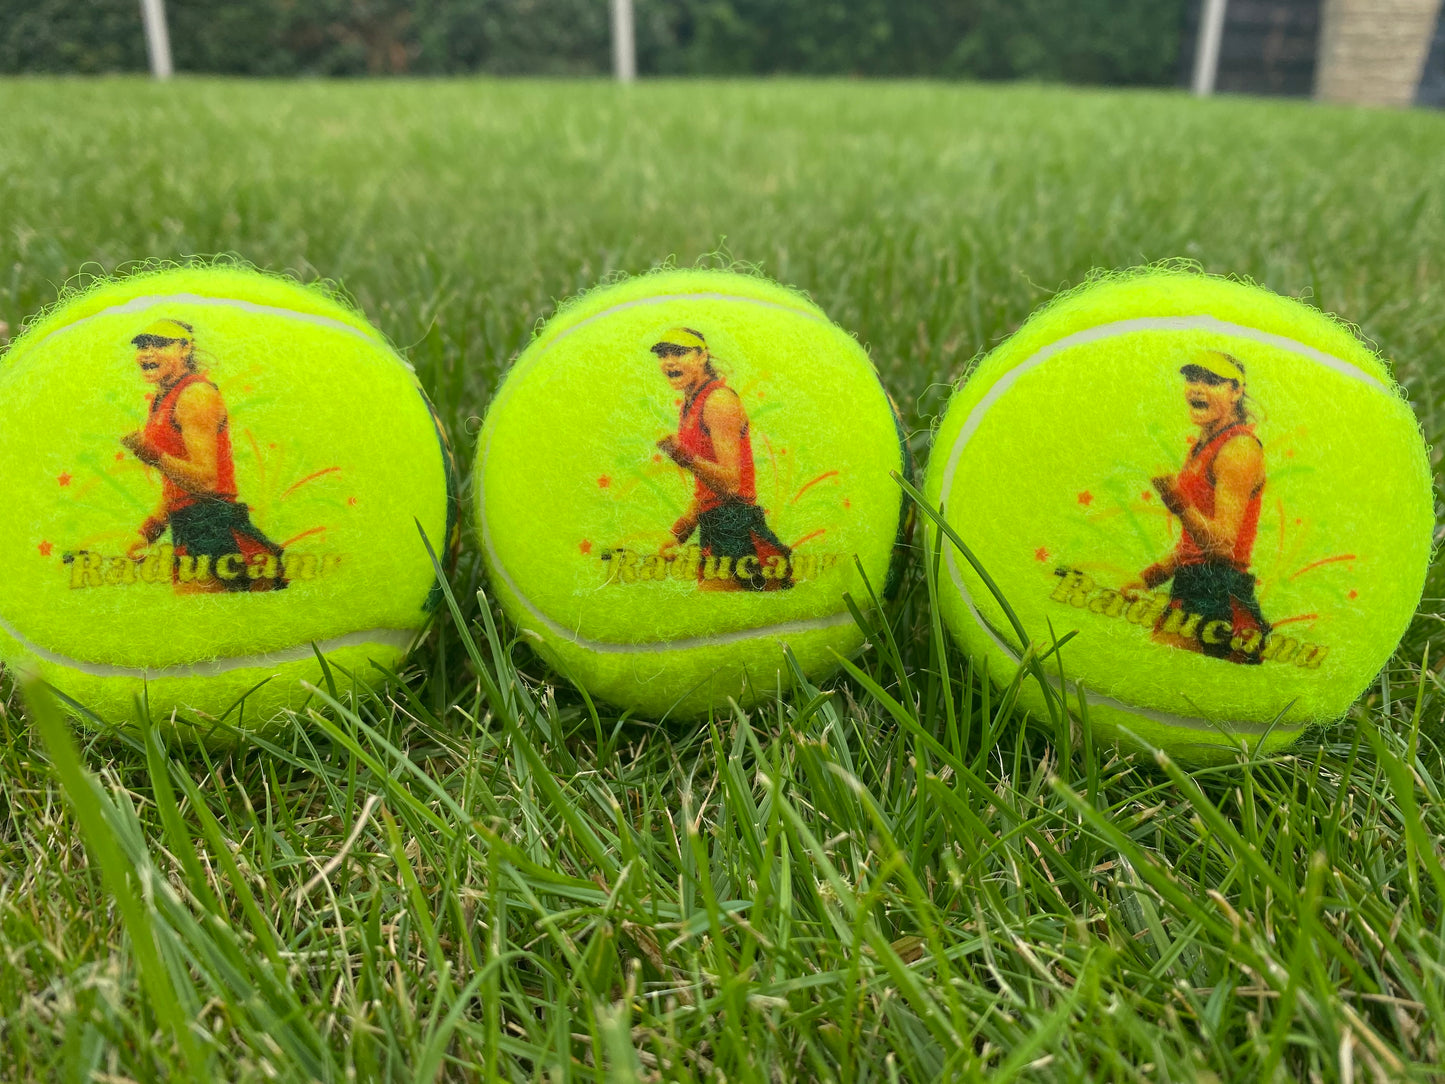 NTB - Personalised Adult Tennis balls - Emma Raducanu